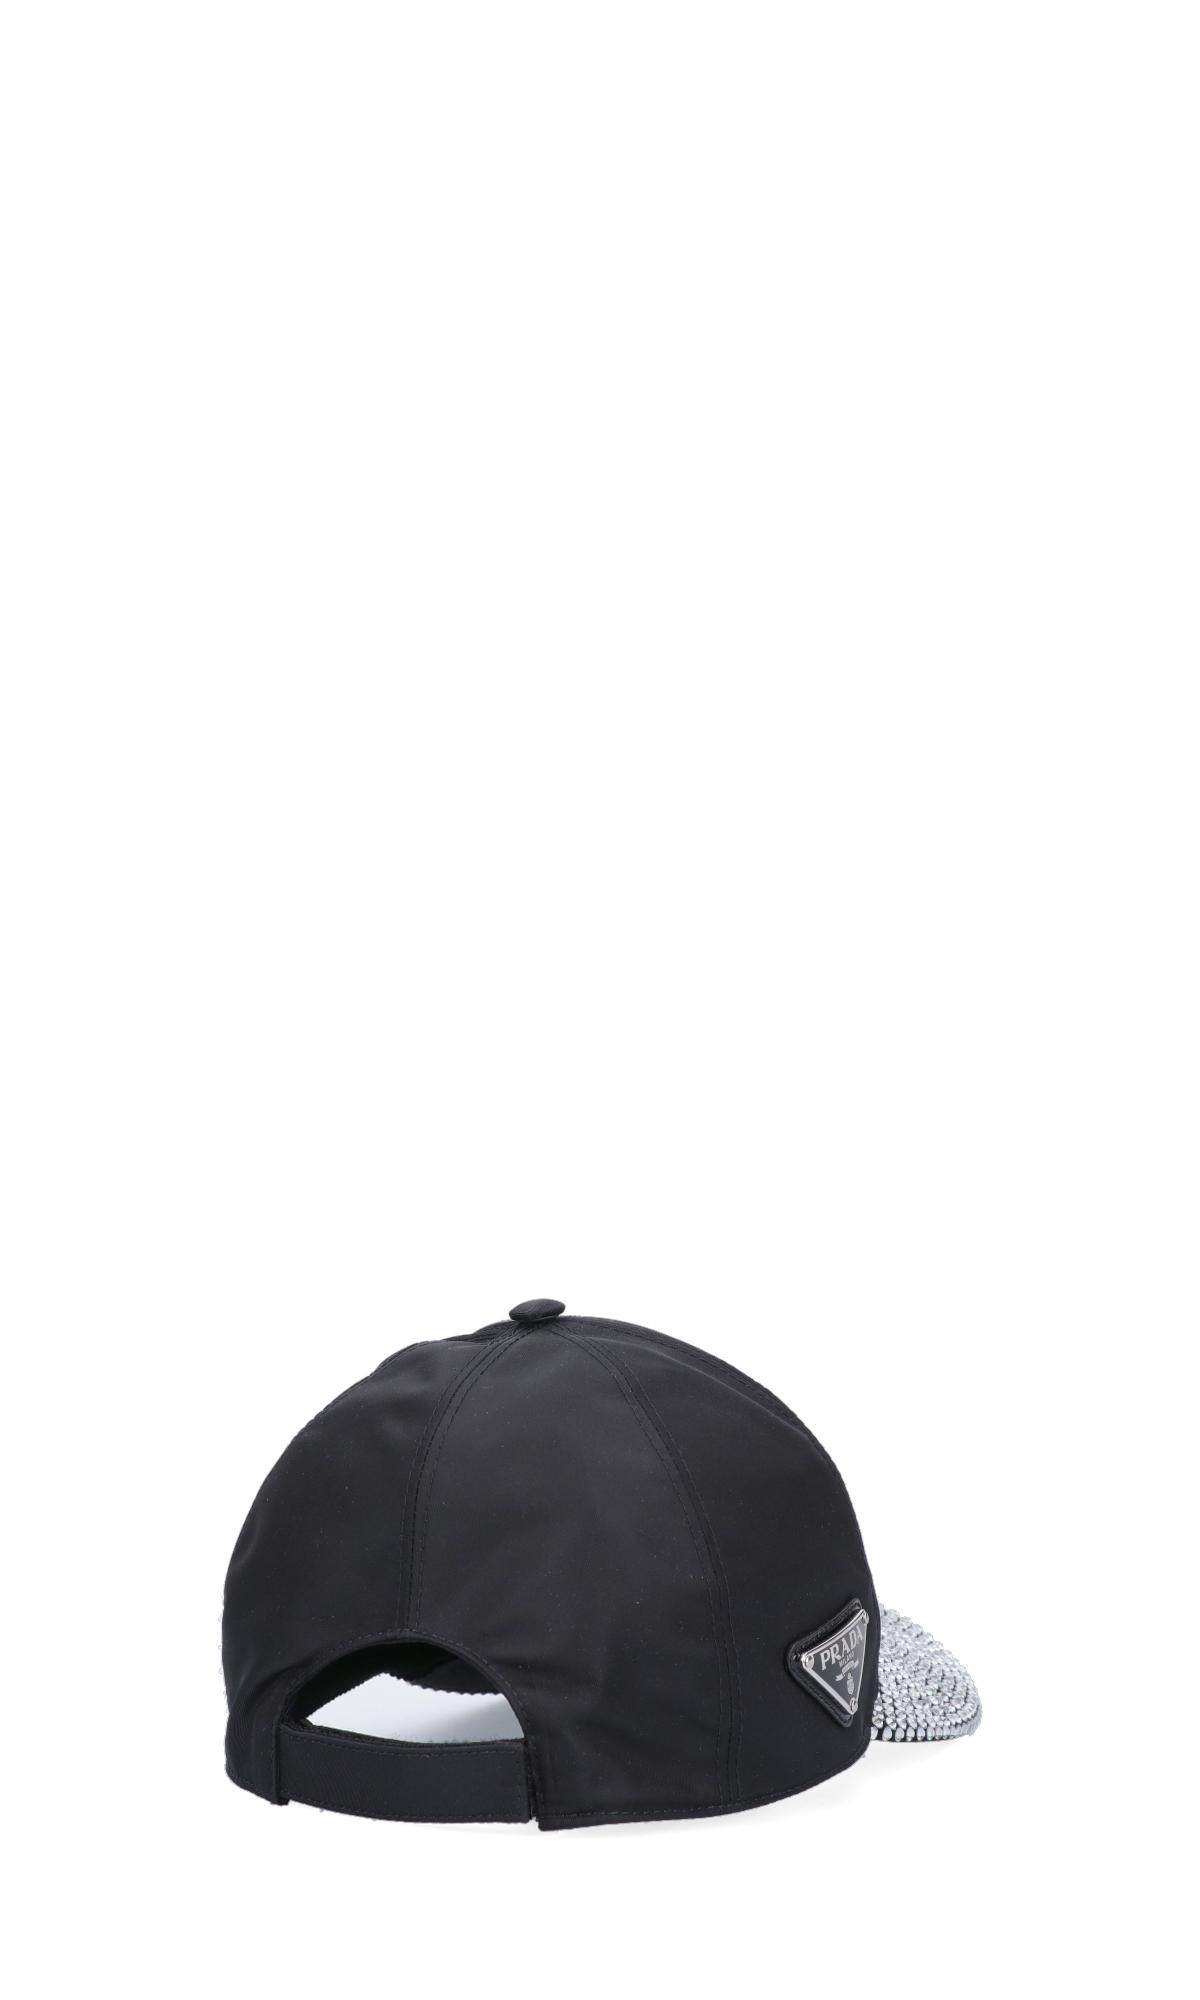 Prada Crystals Baseball Cap in Black | Lyst